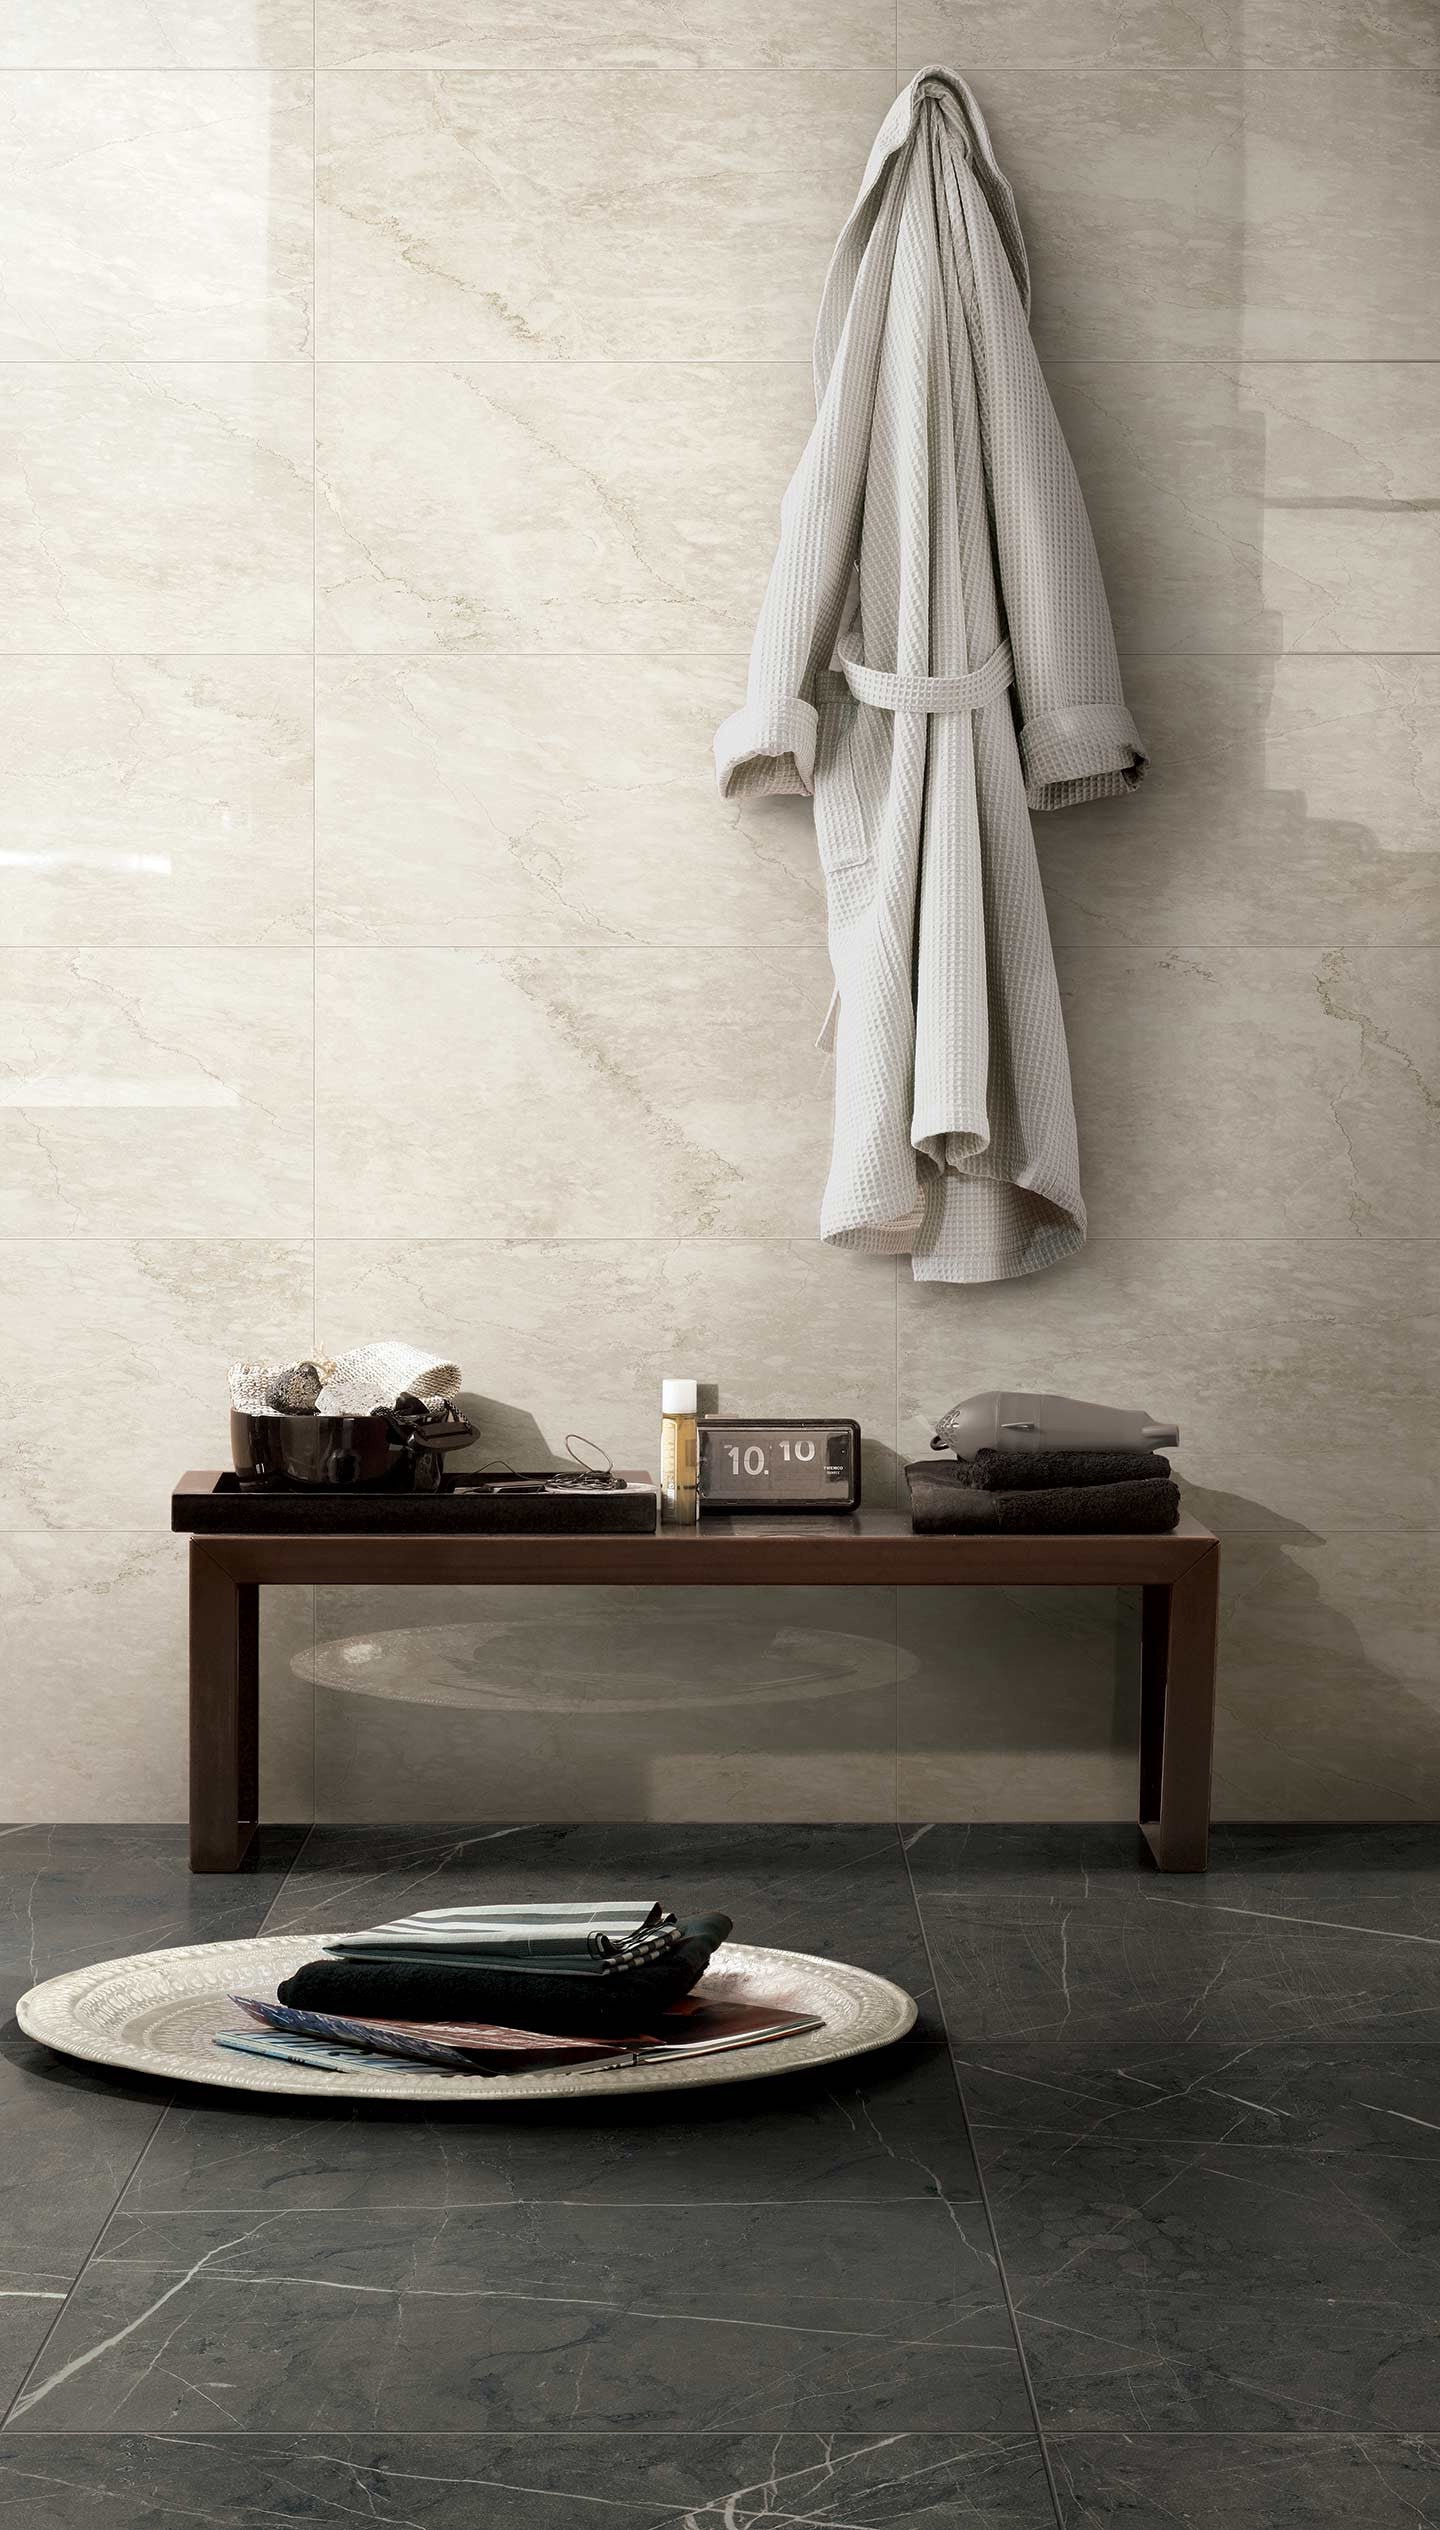 Italian Crema Marble Look Honed Porcelain Floor And Wall Tile  12" x 24"